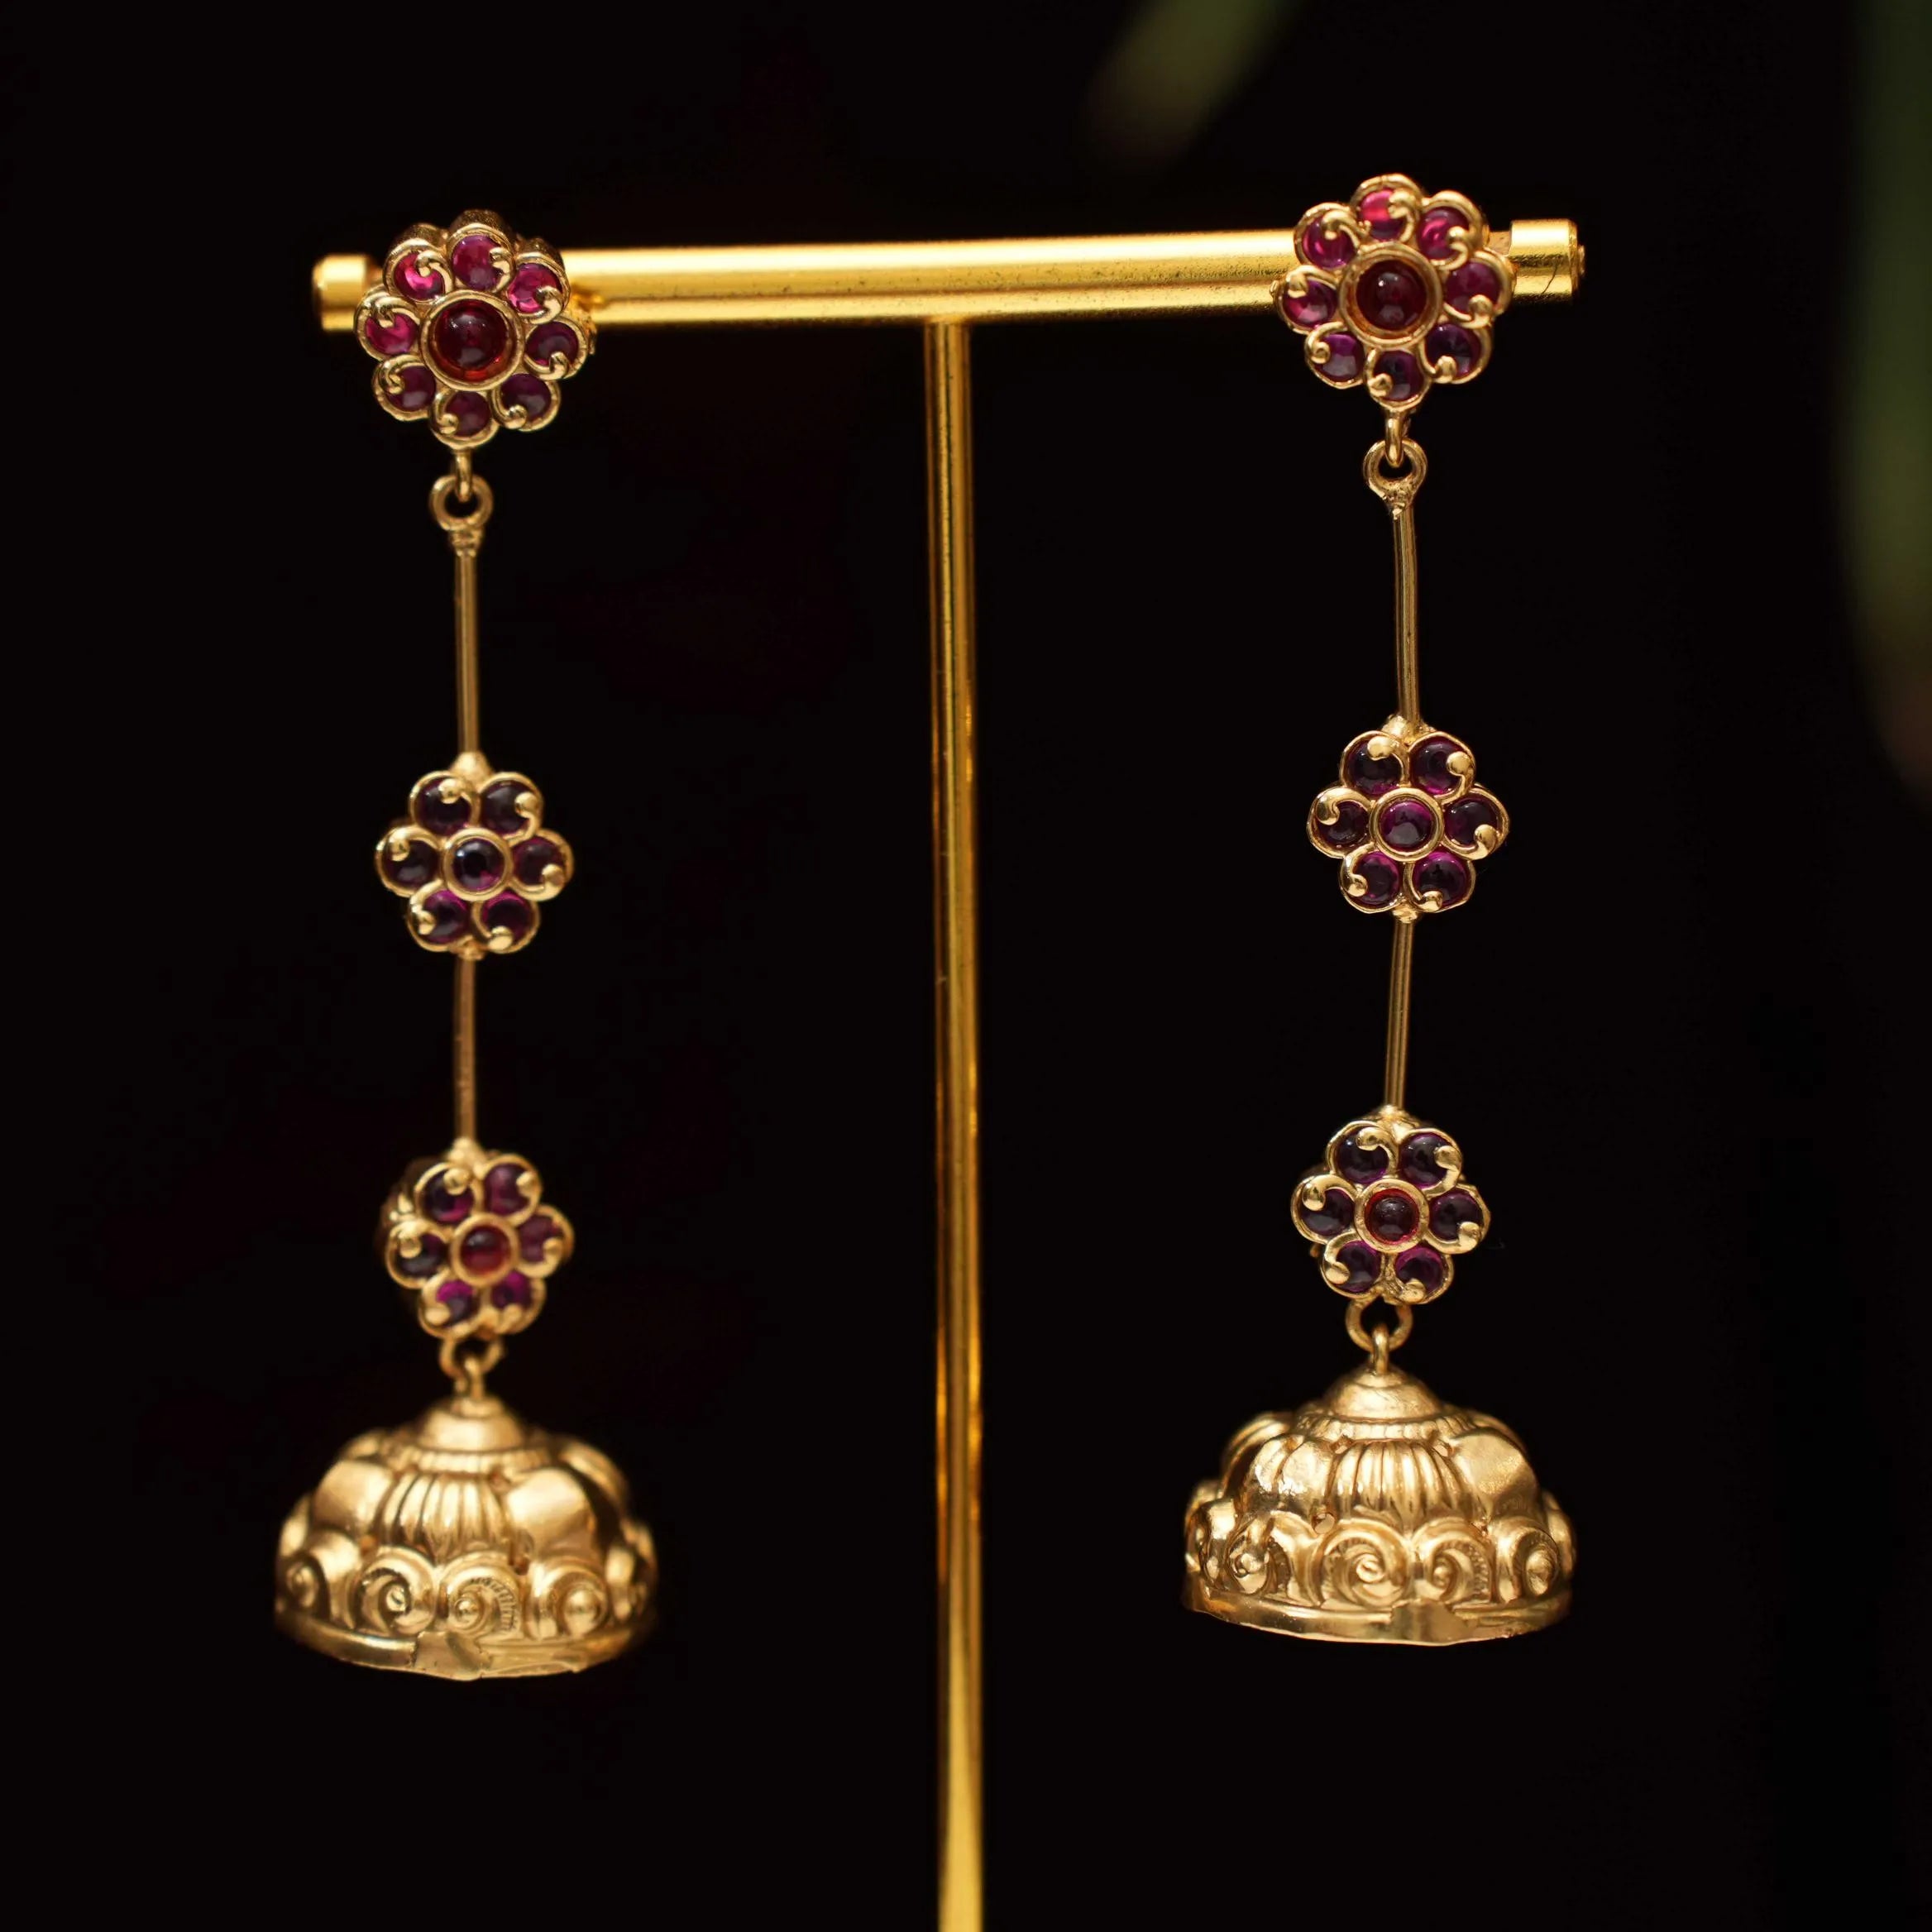 Rudra Antique Earrings - Red